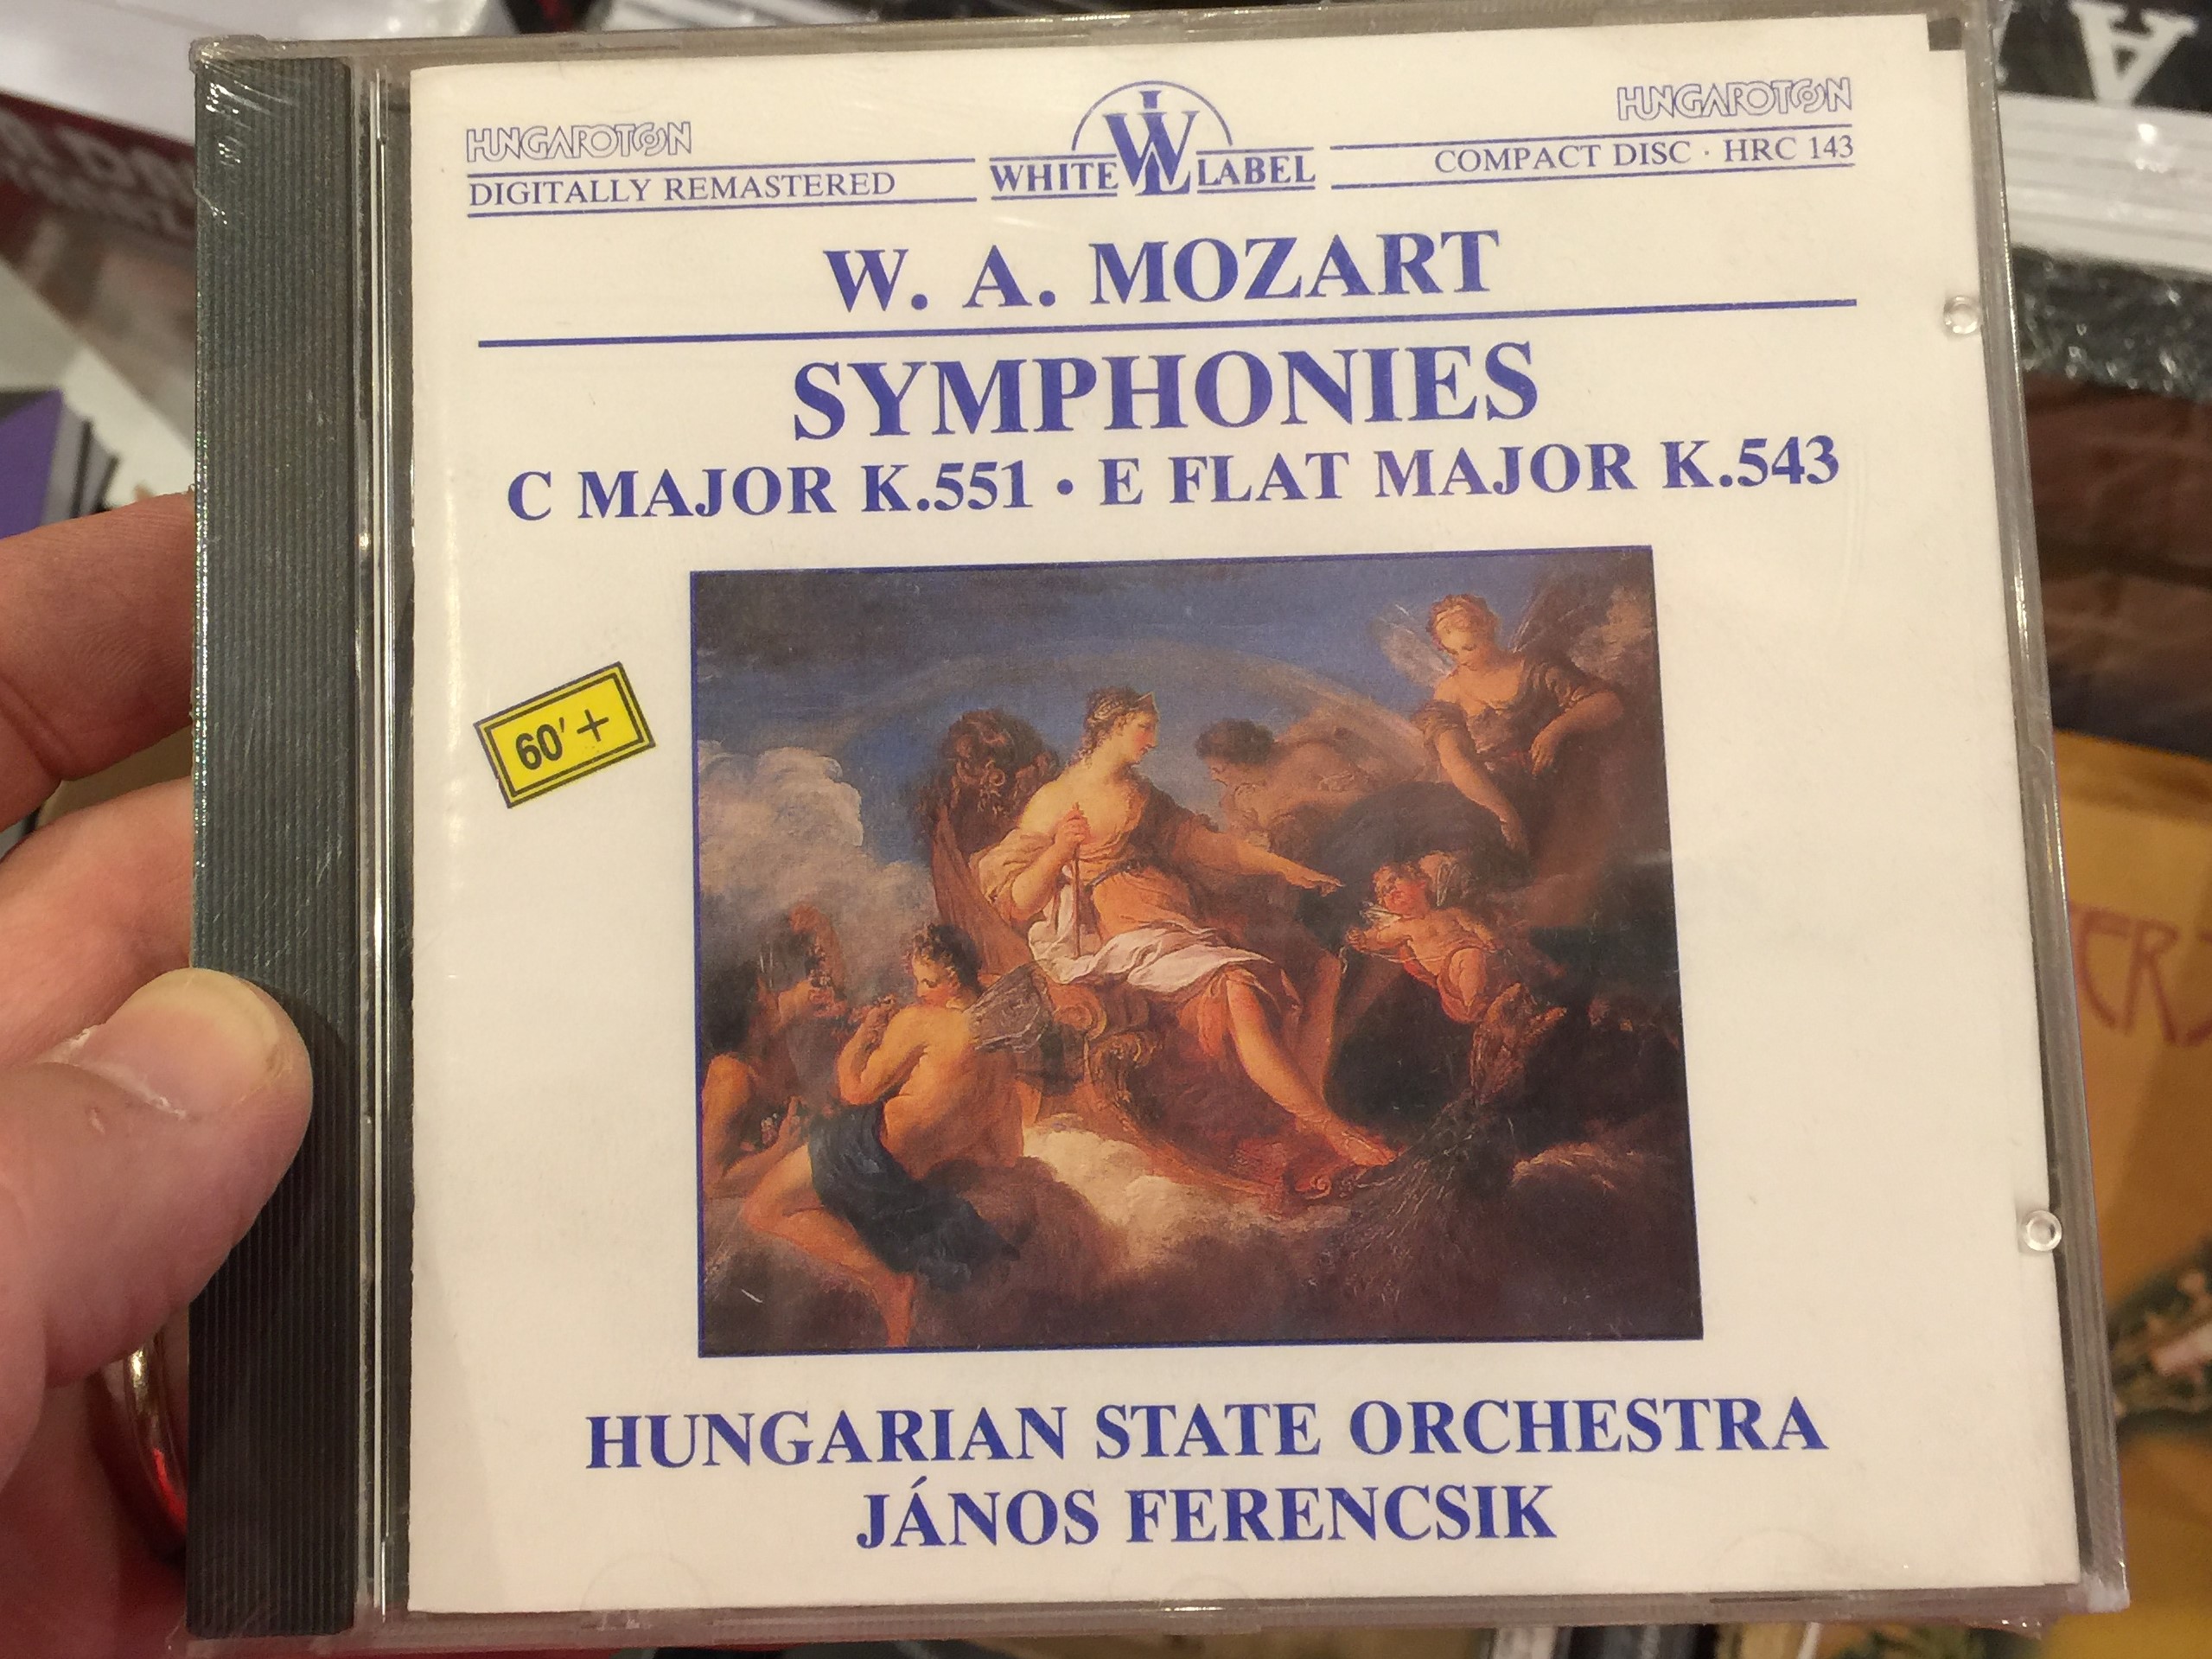 w.-a.-mozart-symphonies-c-major-k.-551-e-flat-major-k.-543-hungarian-state-orchestra-janos-ferencsik-white-label-audio-cd-1989-hrc-143-1-.jpg